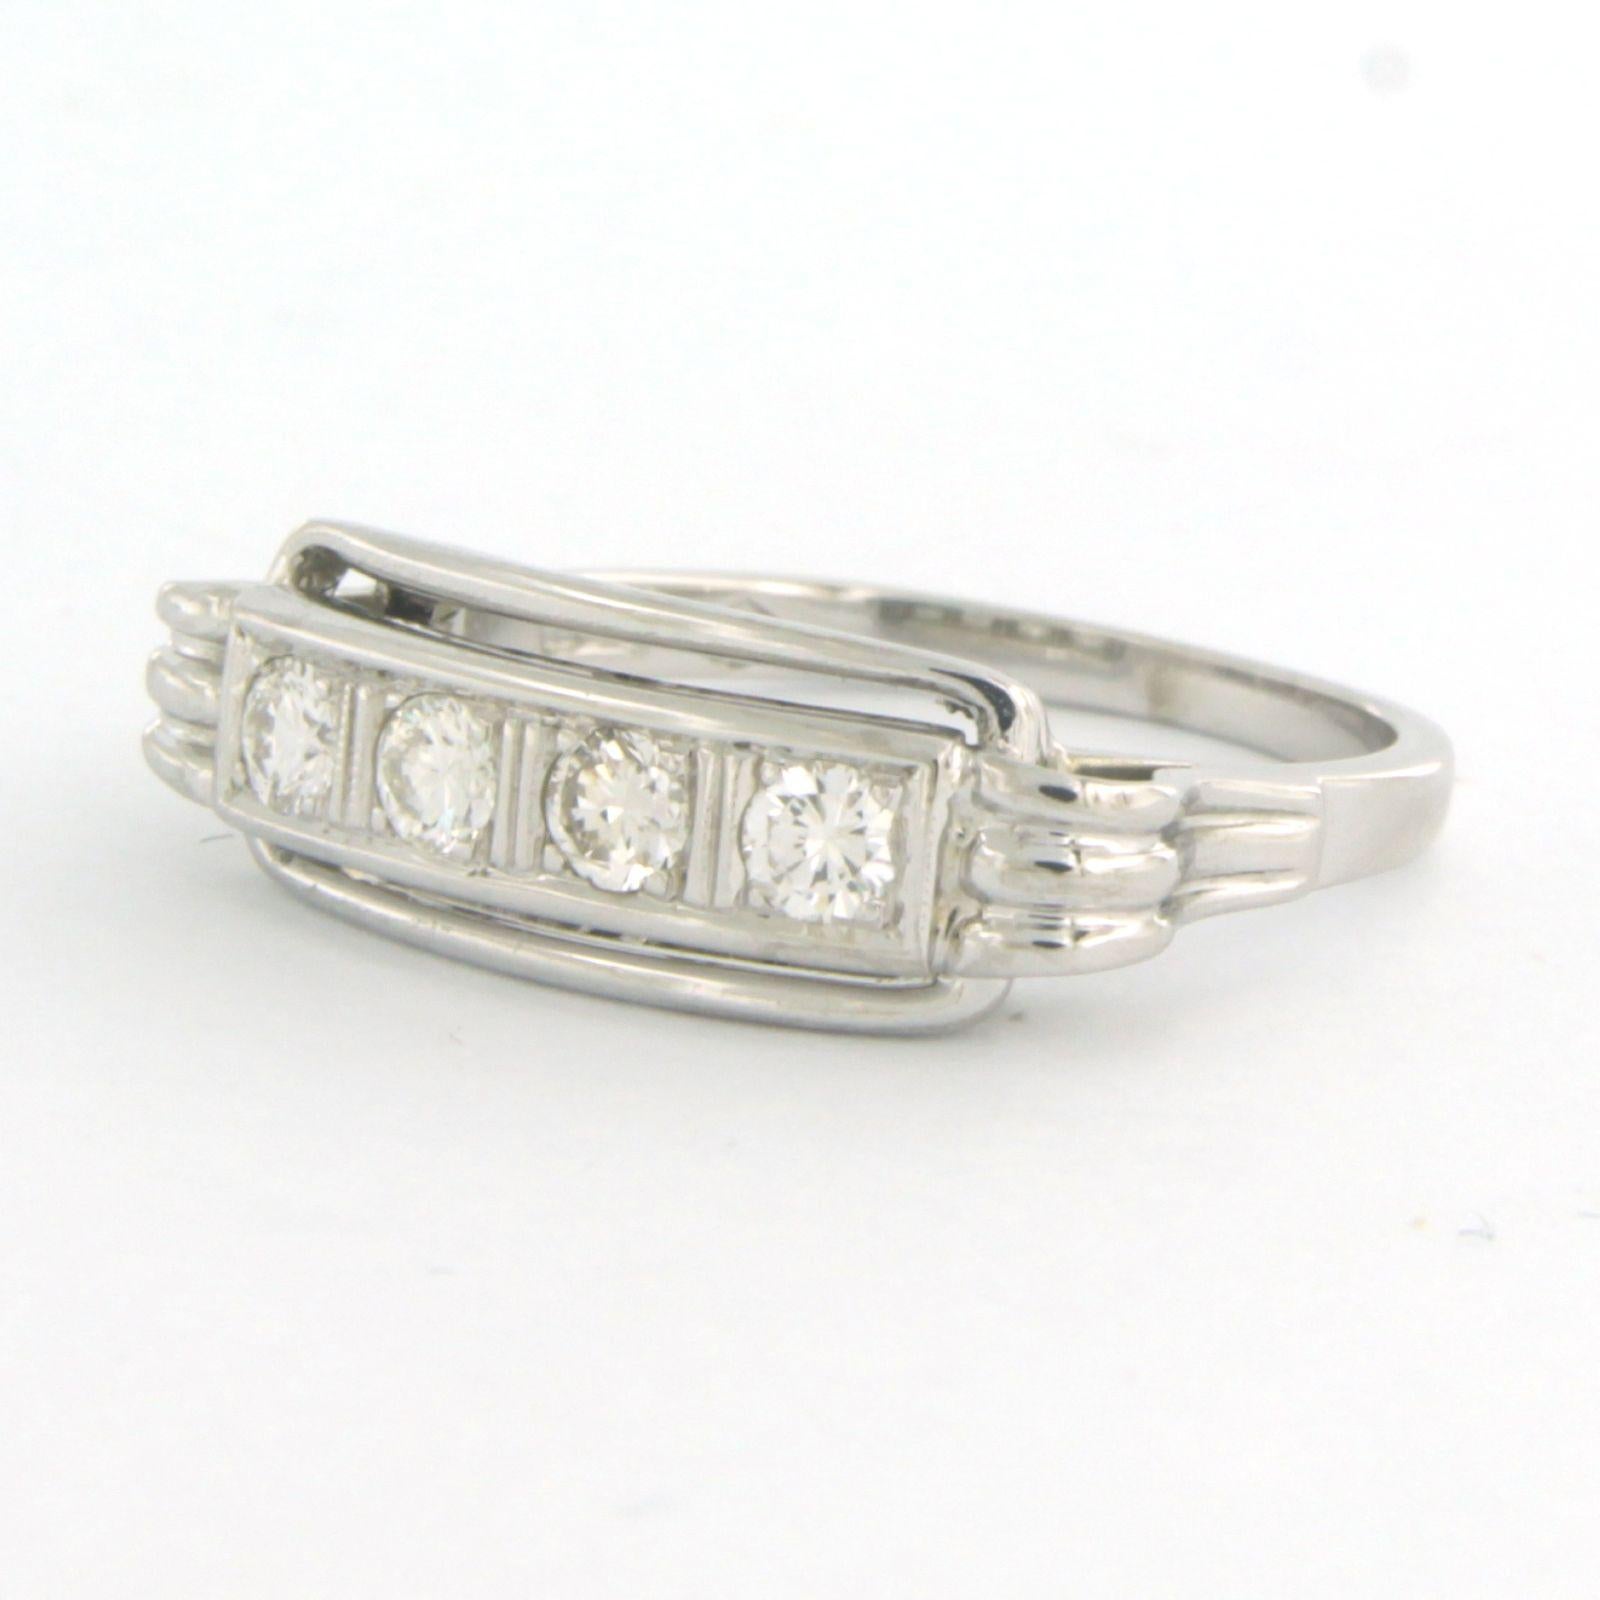 Brilliant Cut Ring with diamonds 18k white gold